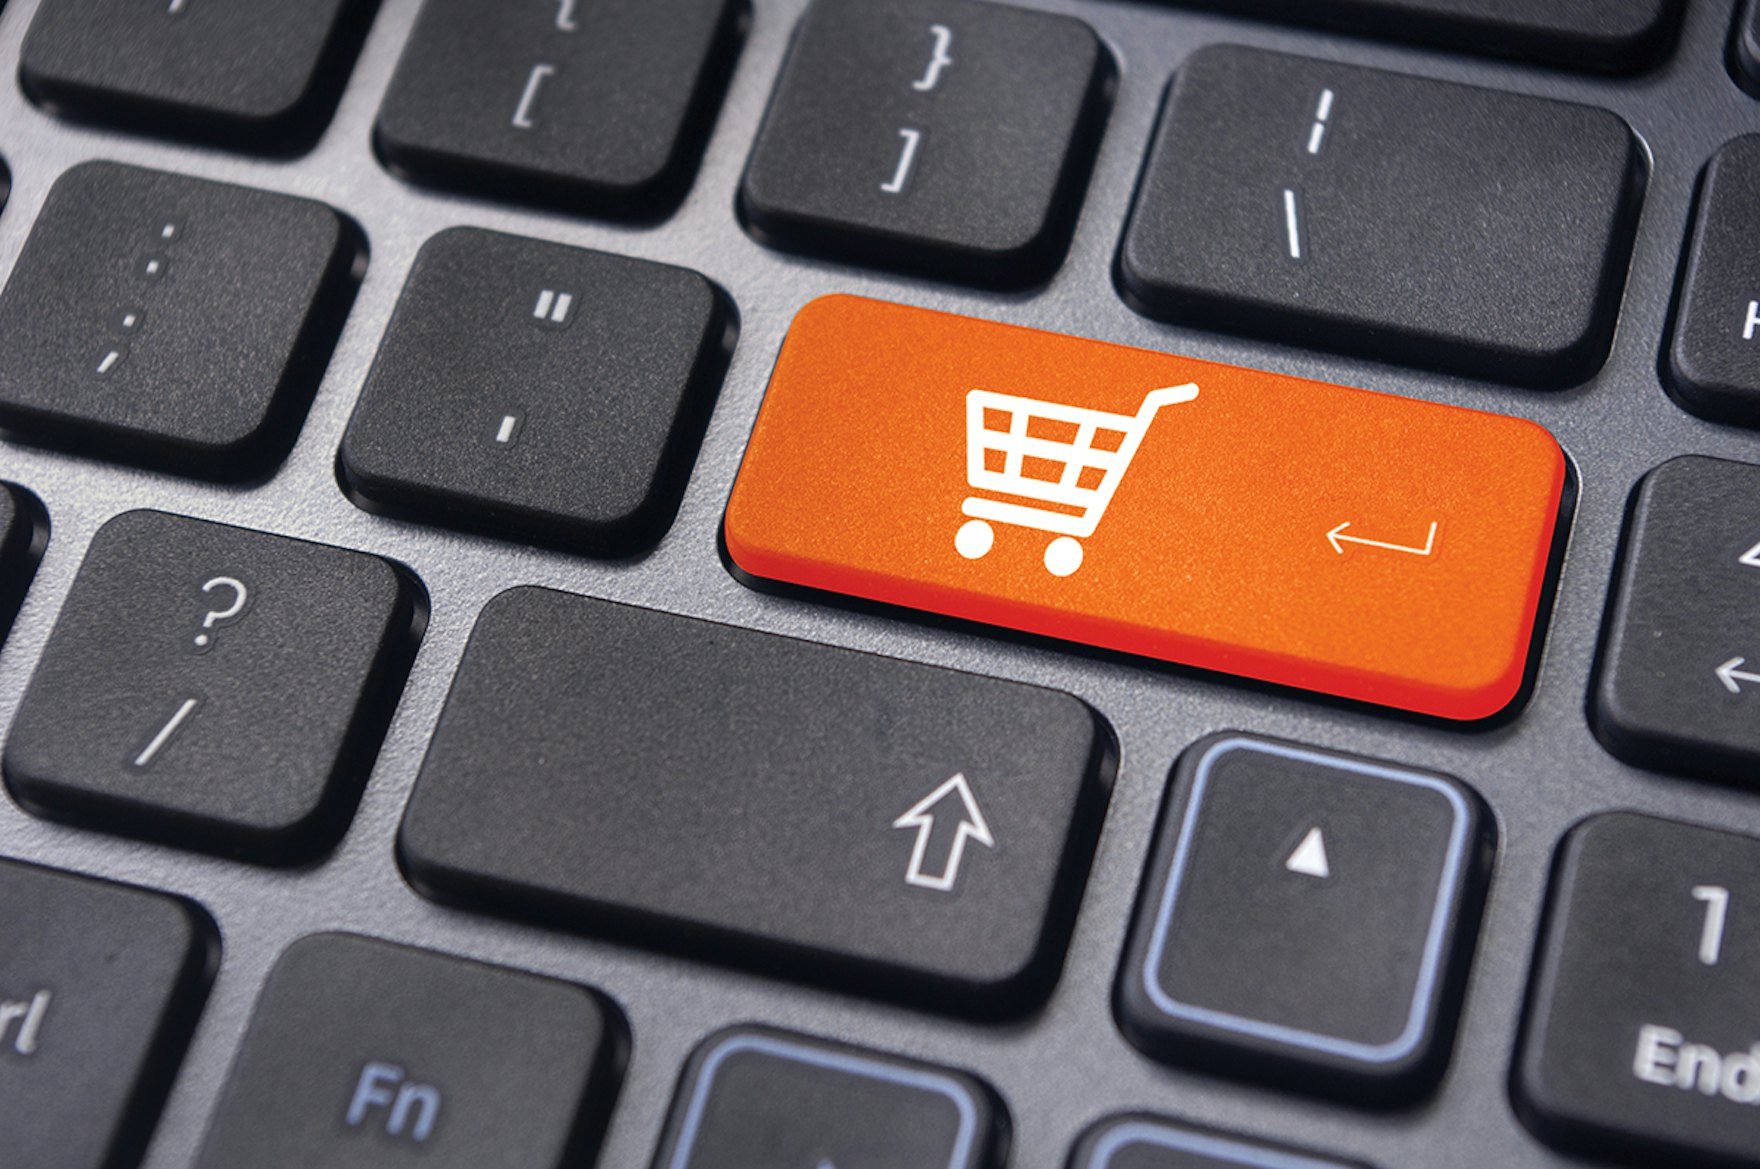 shopping cart image on keyboard